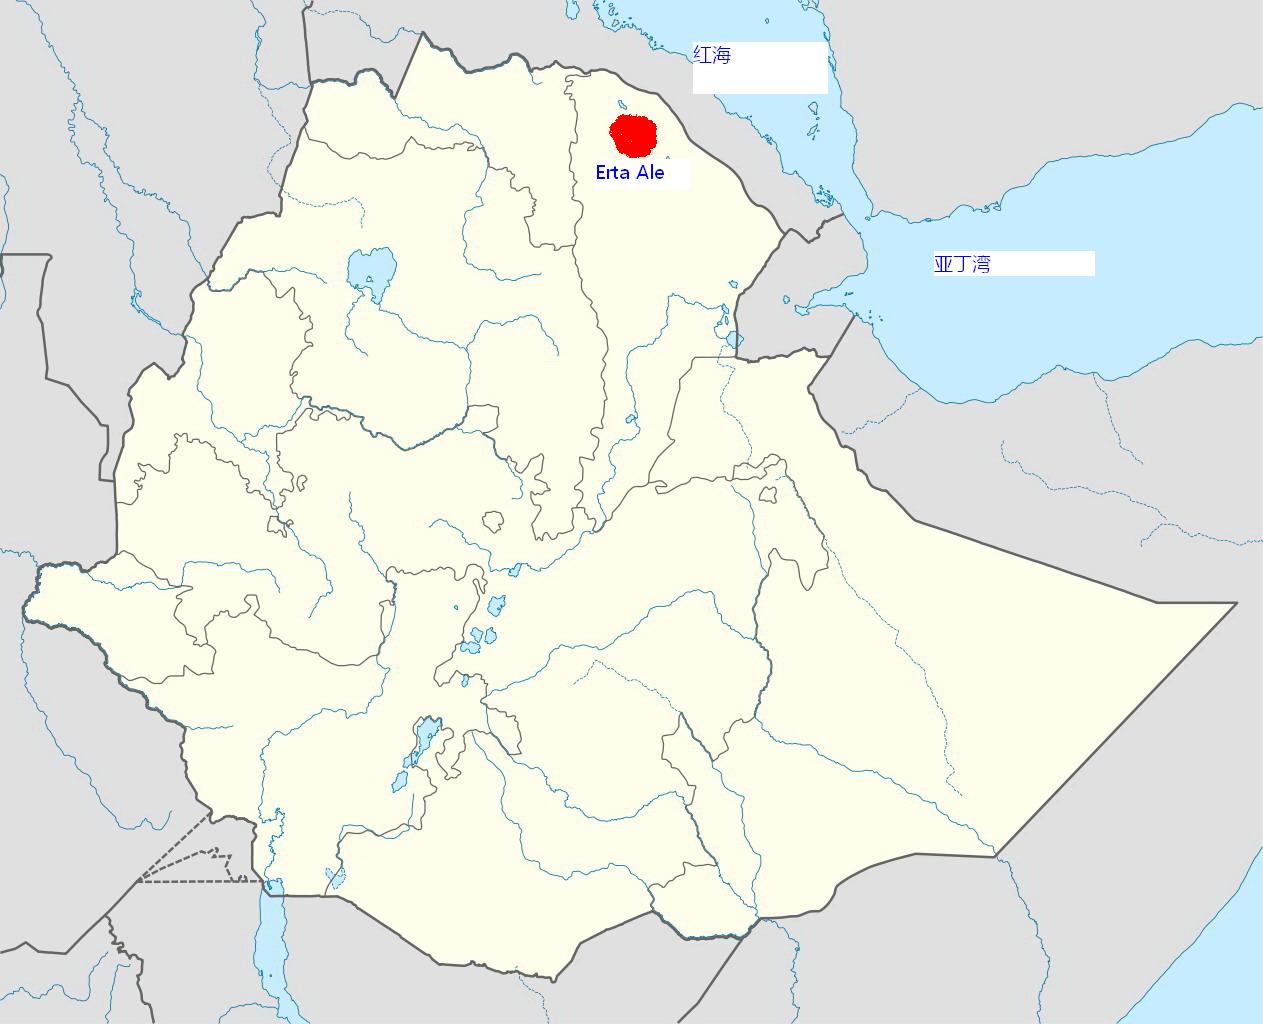 1263px-Ethiopia_location_map1.jpg